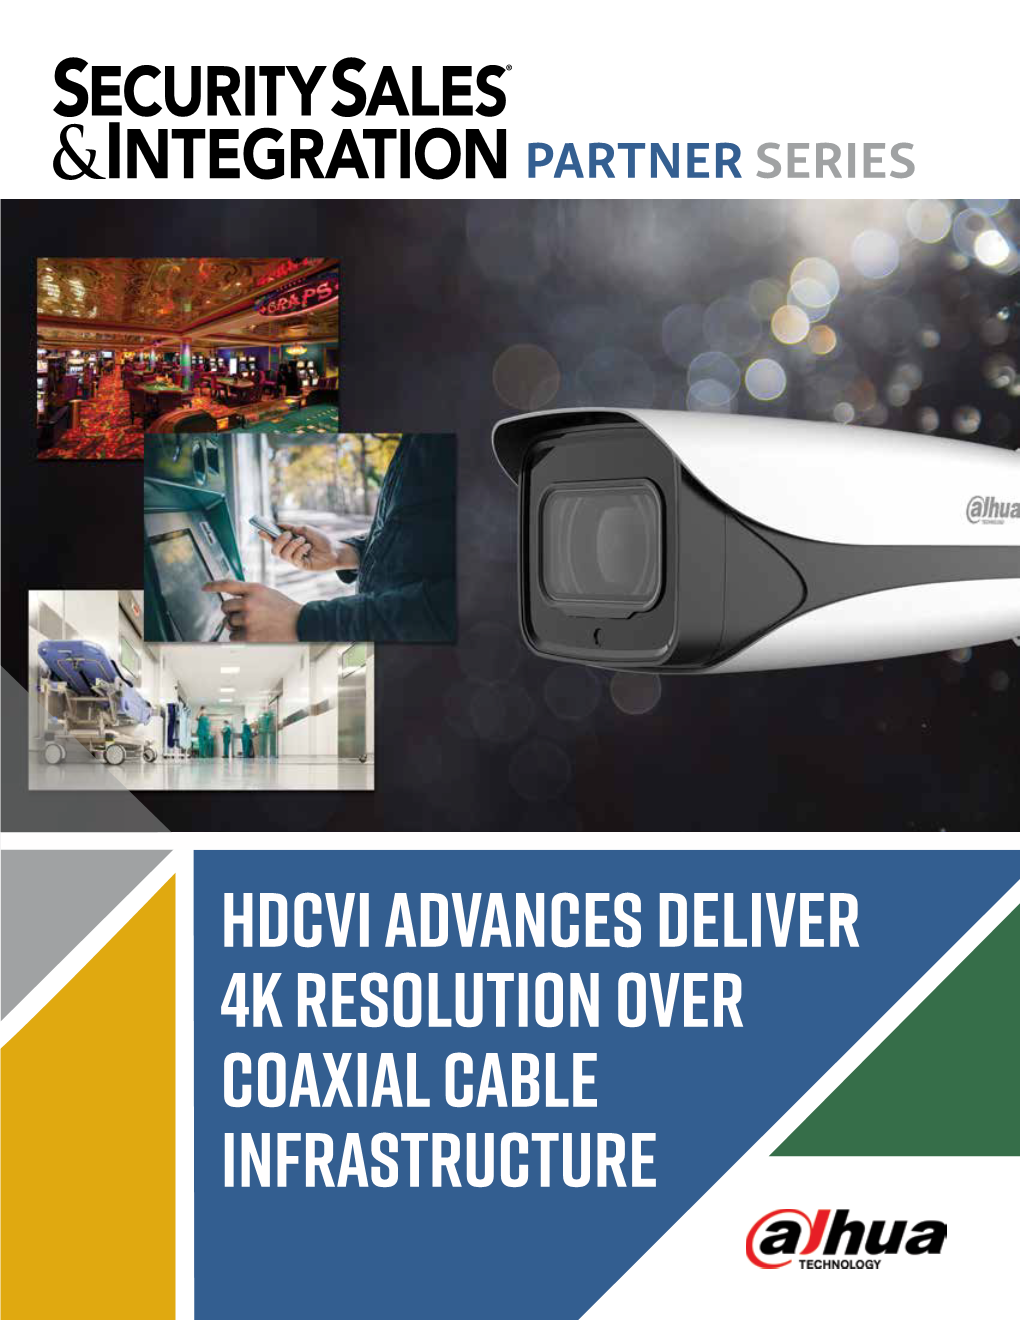 HDCVI Advances Deliver 4K Resolution Over Coaxial Cable